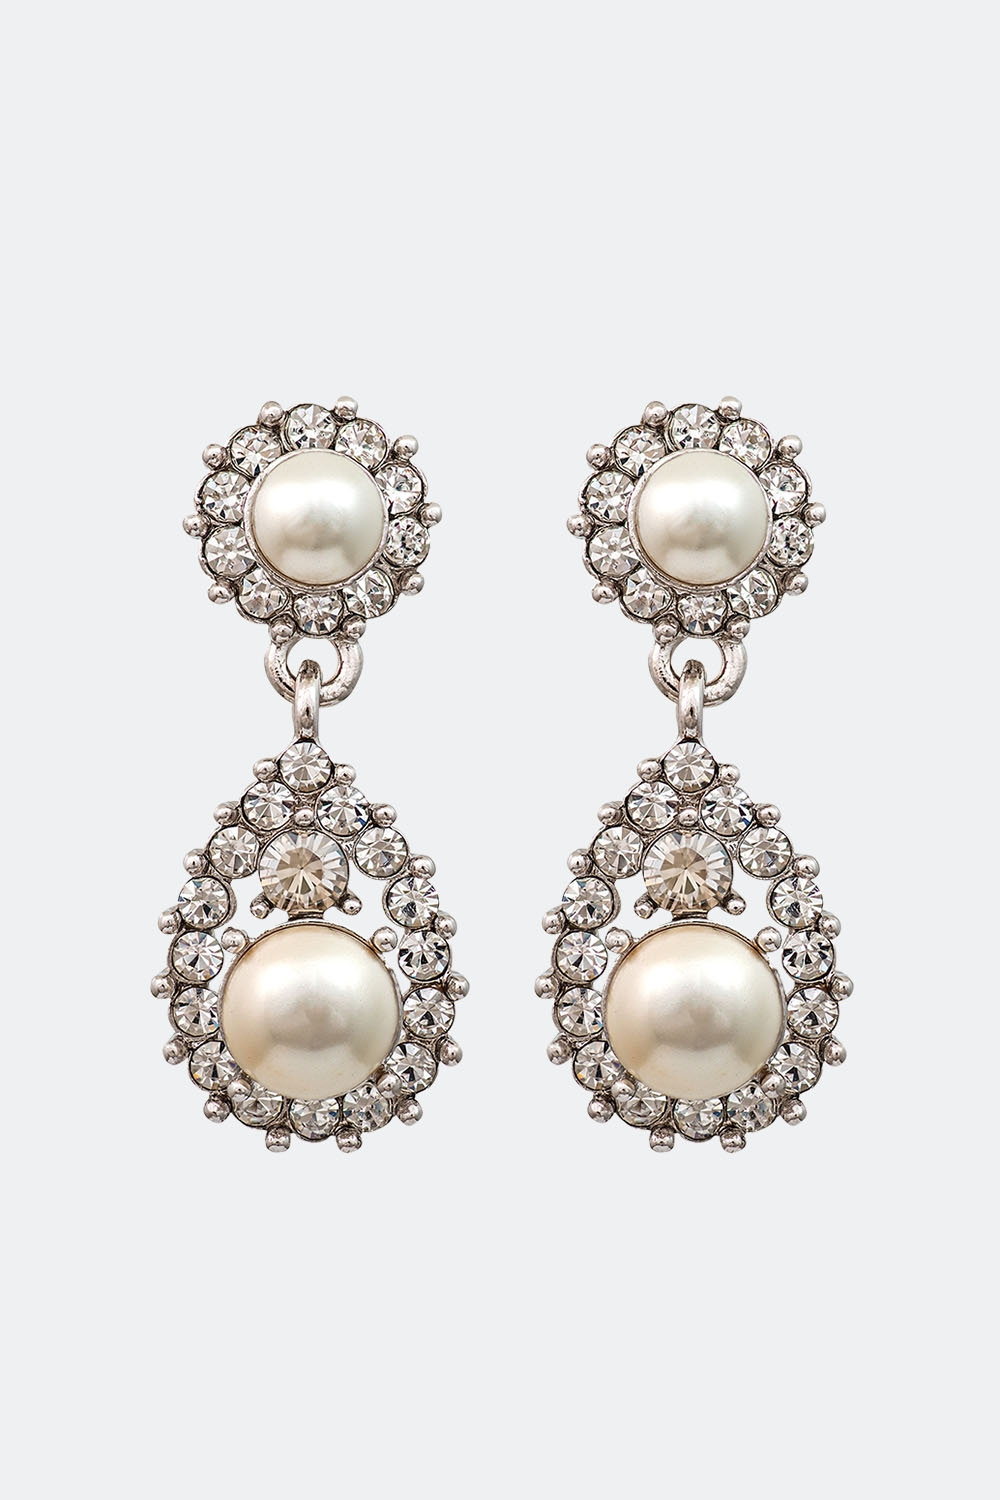 Sofia Pearl earrings - Créme